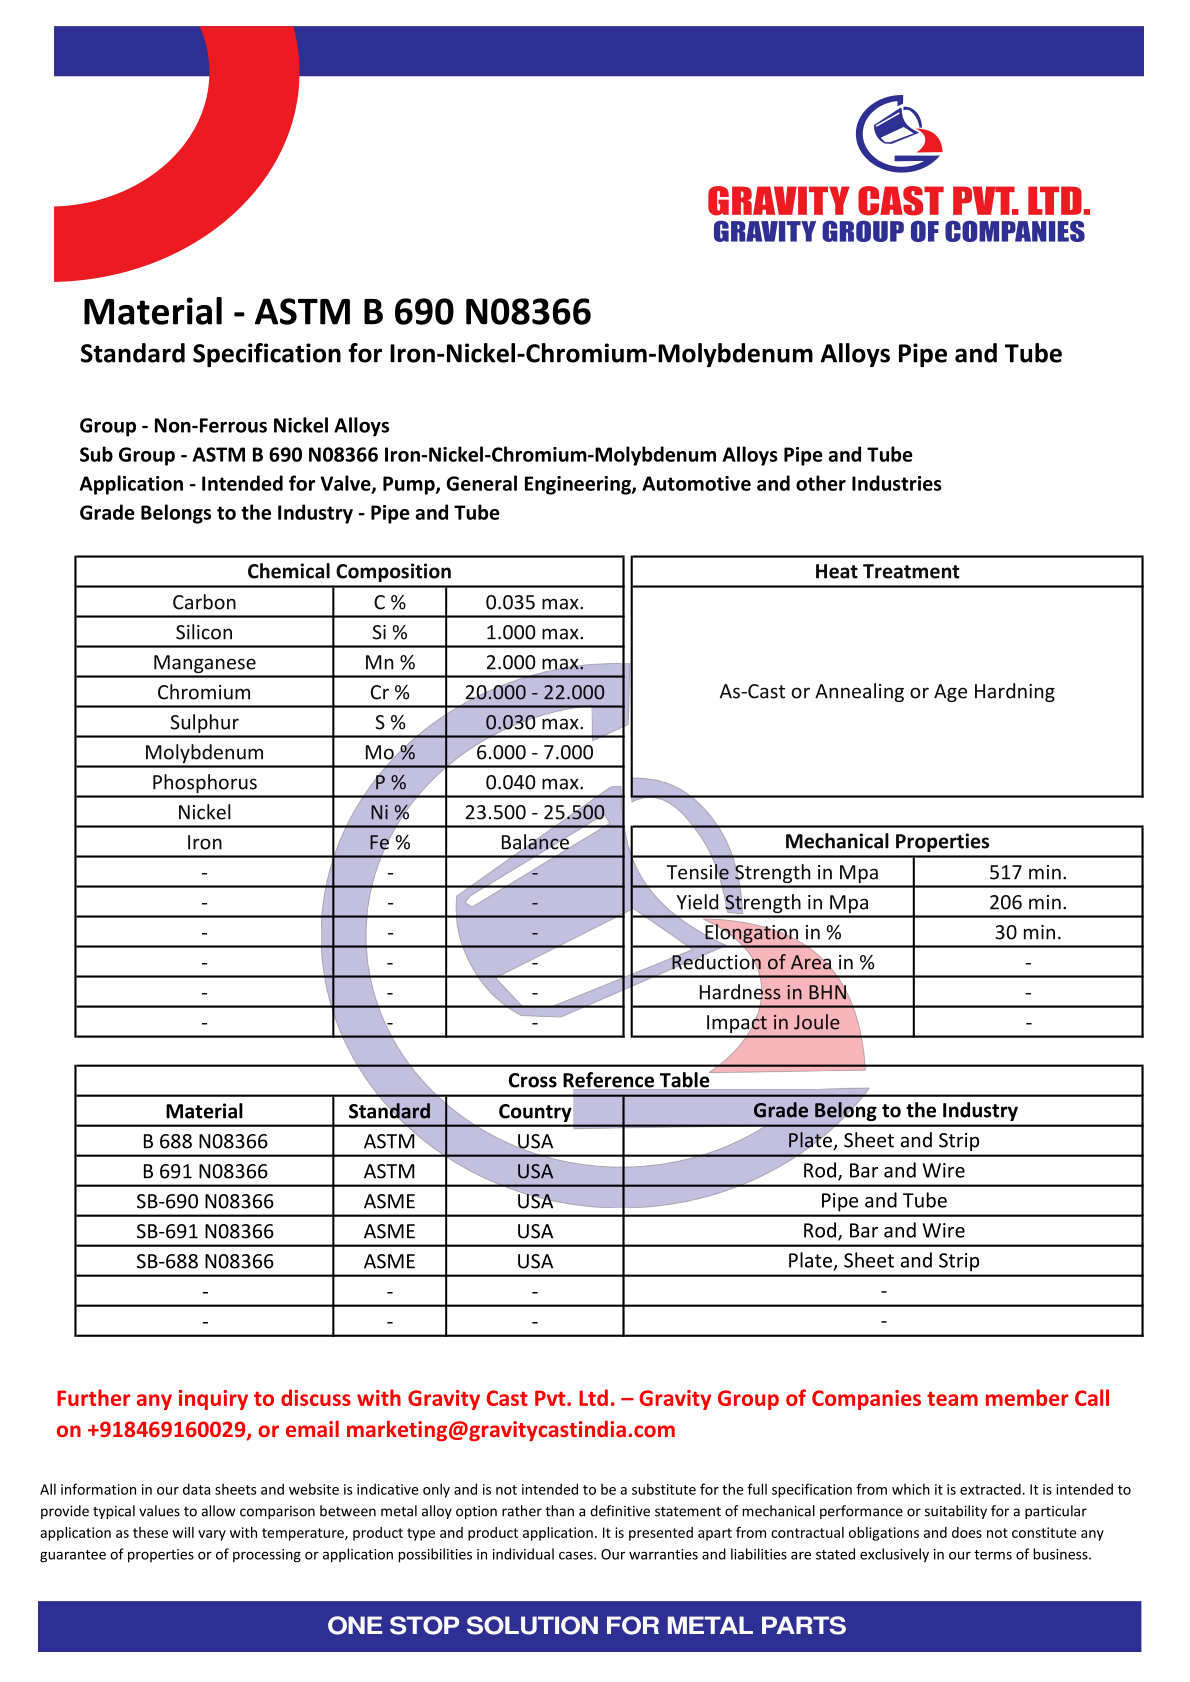 ASTM B 690 N08366.pdf